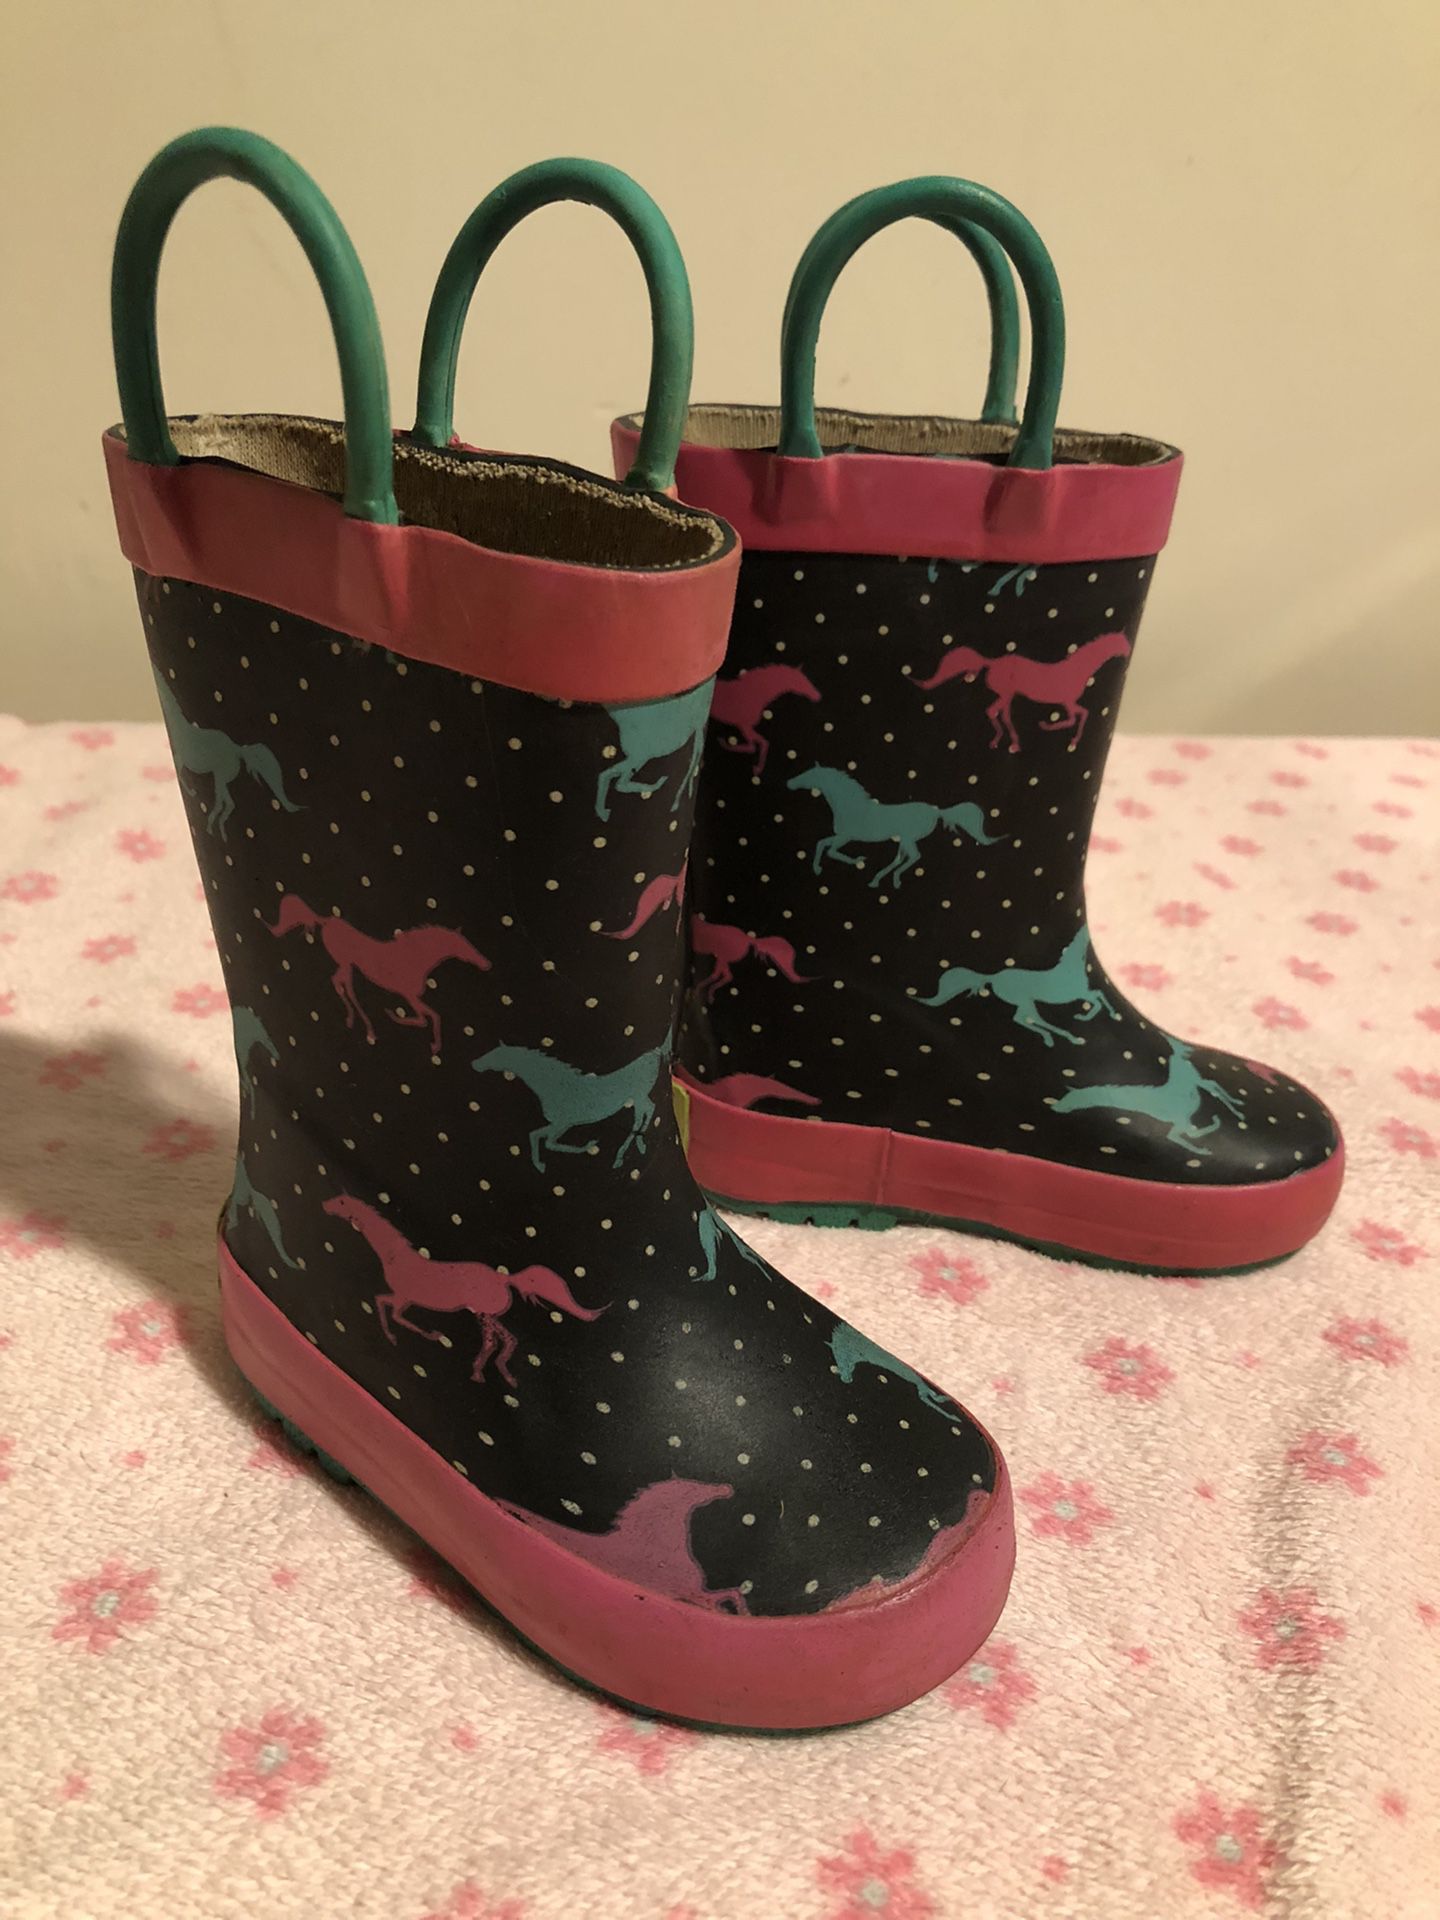 Girls Toddler Rain Boots, Size 5